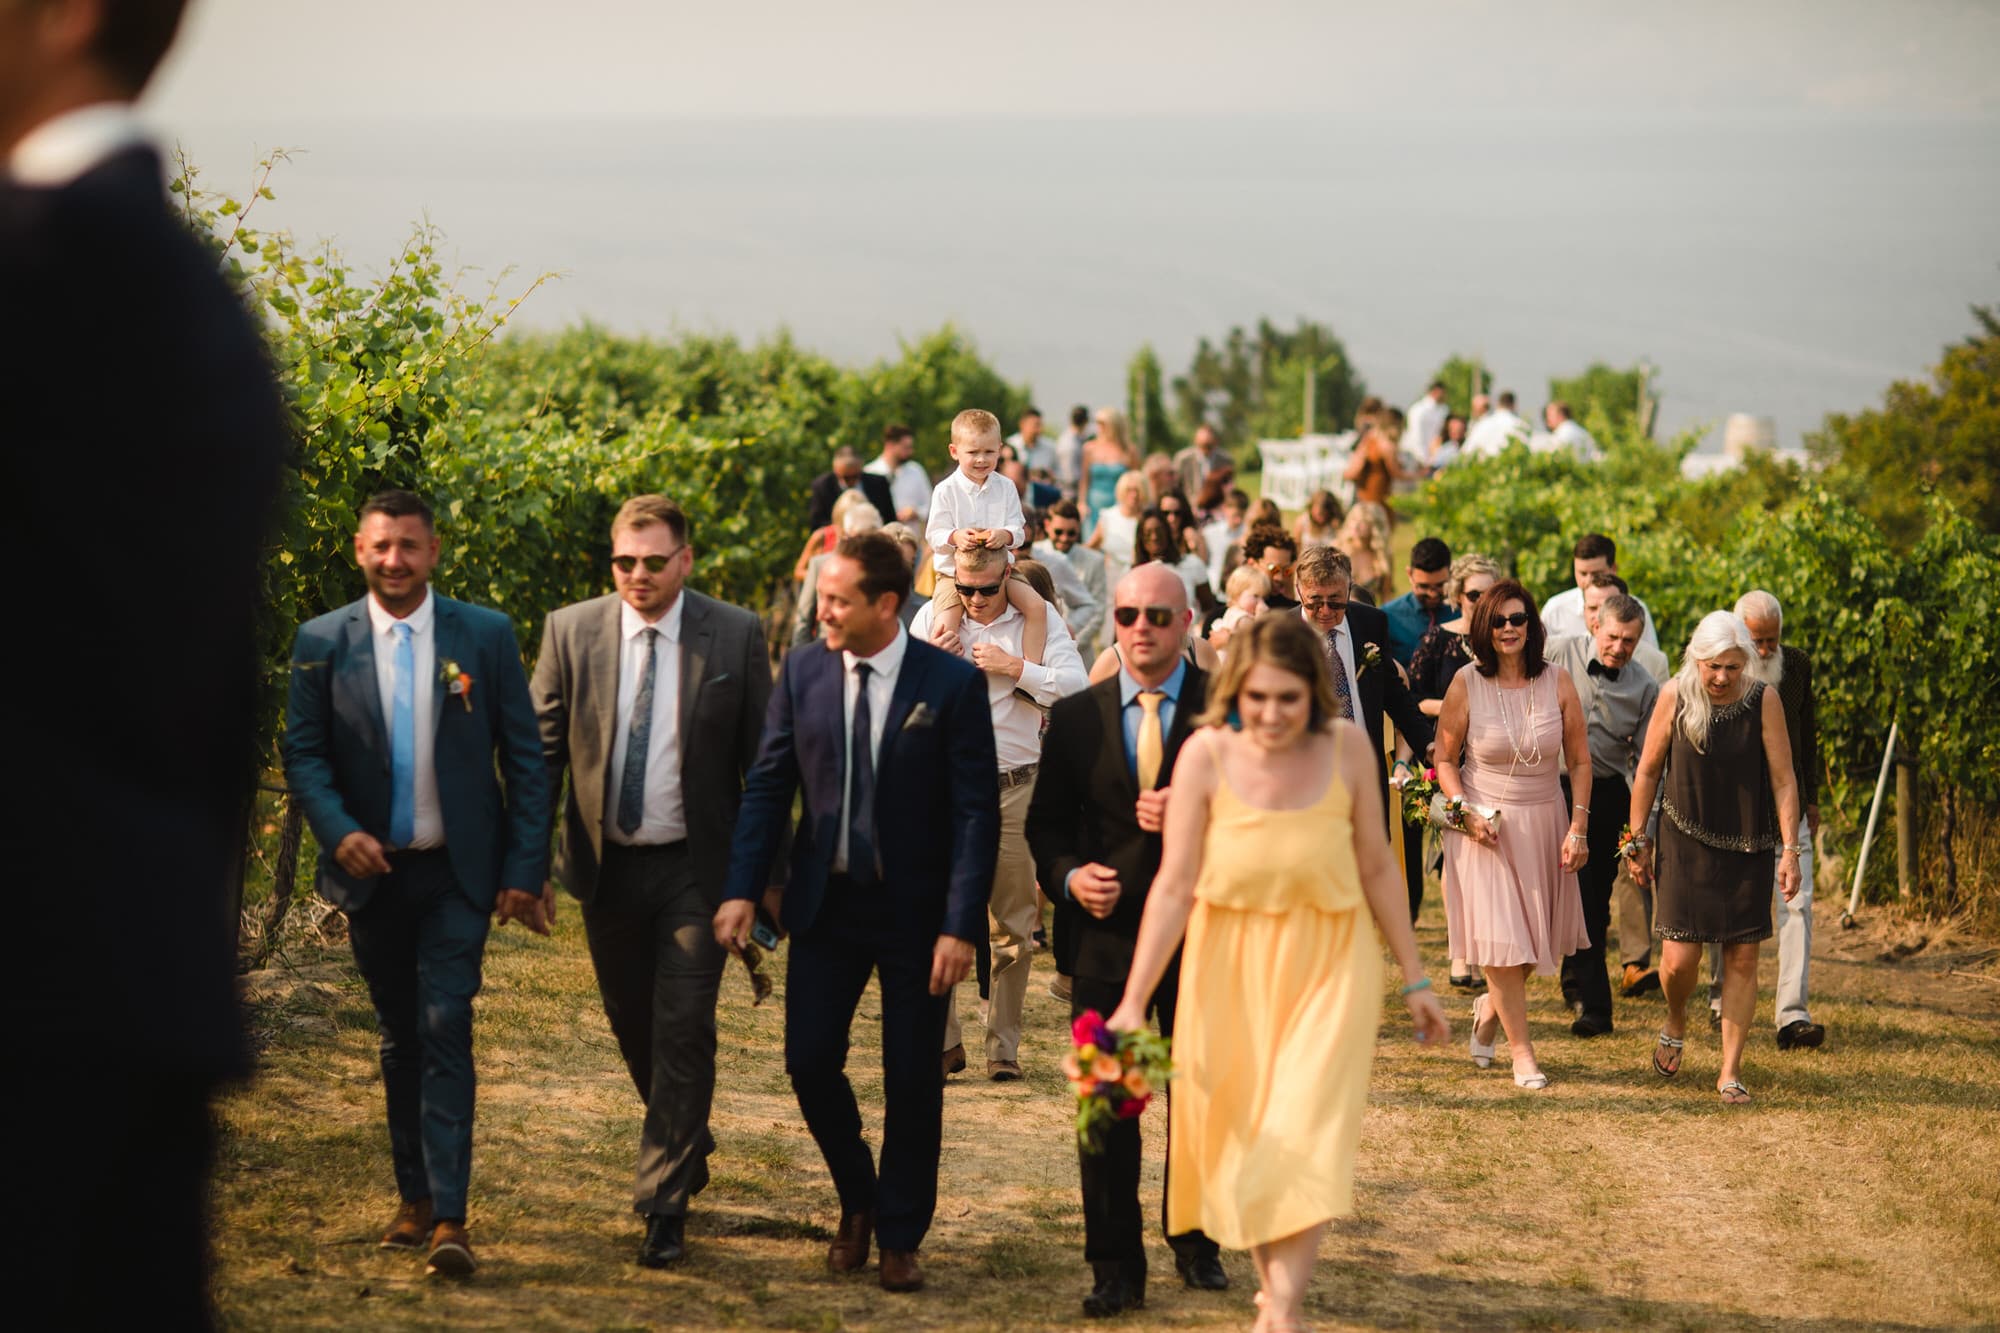 Wedding guests leave the ceremony at Evolve Cellars Vineyard on Lake Okanagan, Summerland, BC. Destination wedding photographer Brent Calis.